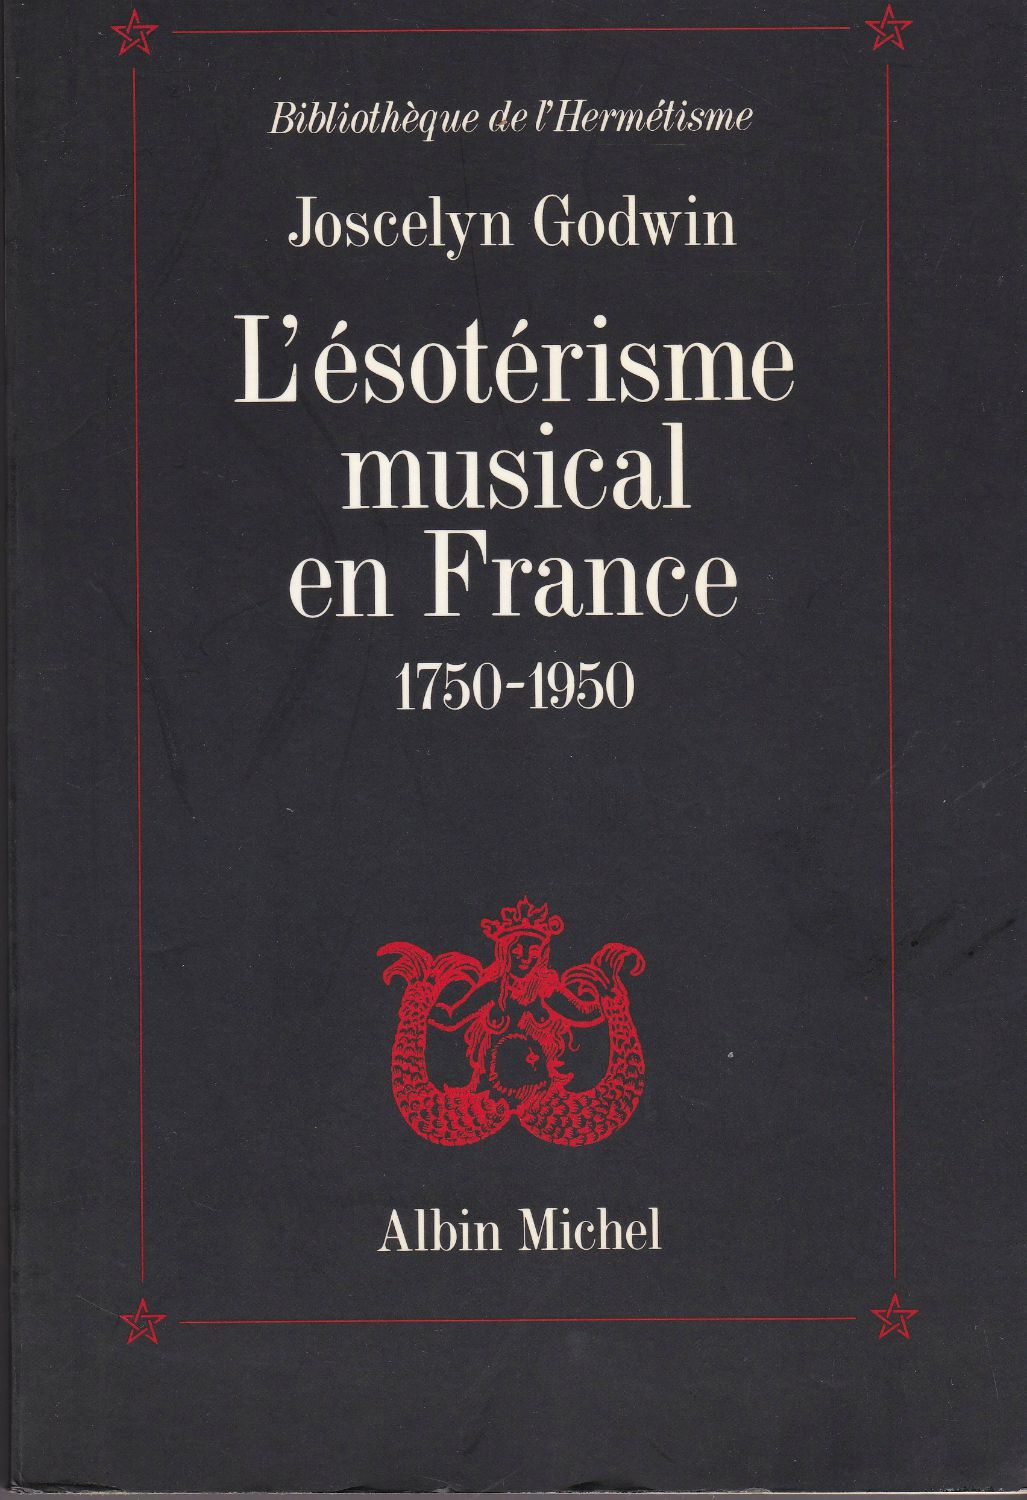 L'esoterisme musical en France, 1750-1950. (Bibliotheque de l'hermetisme)